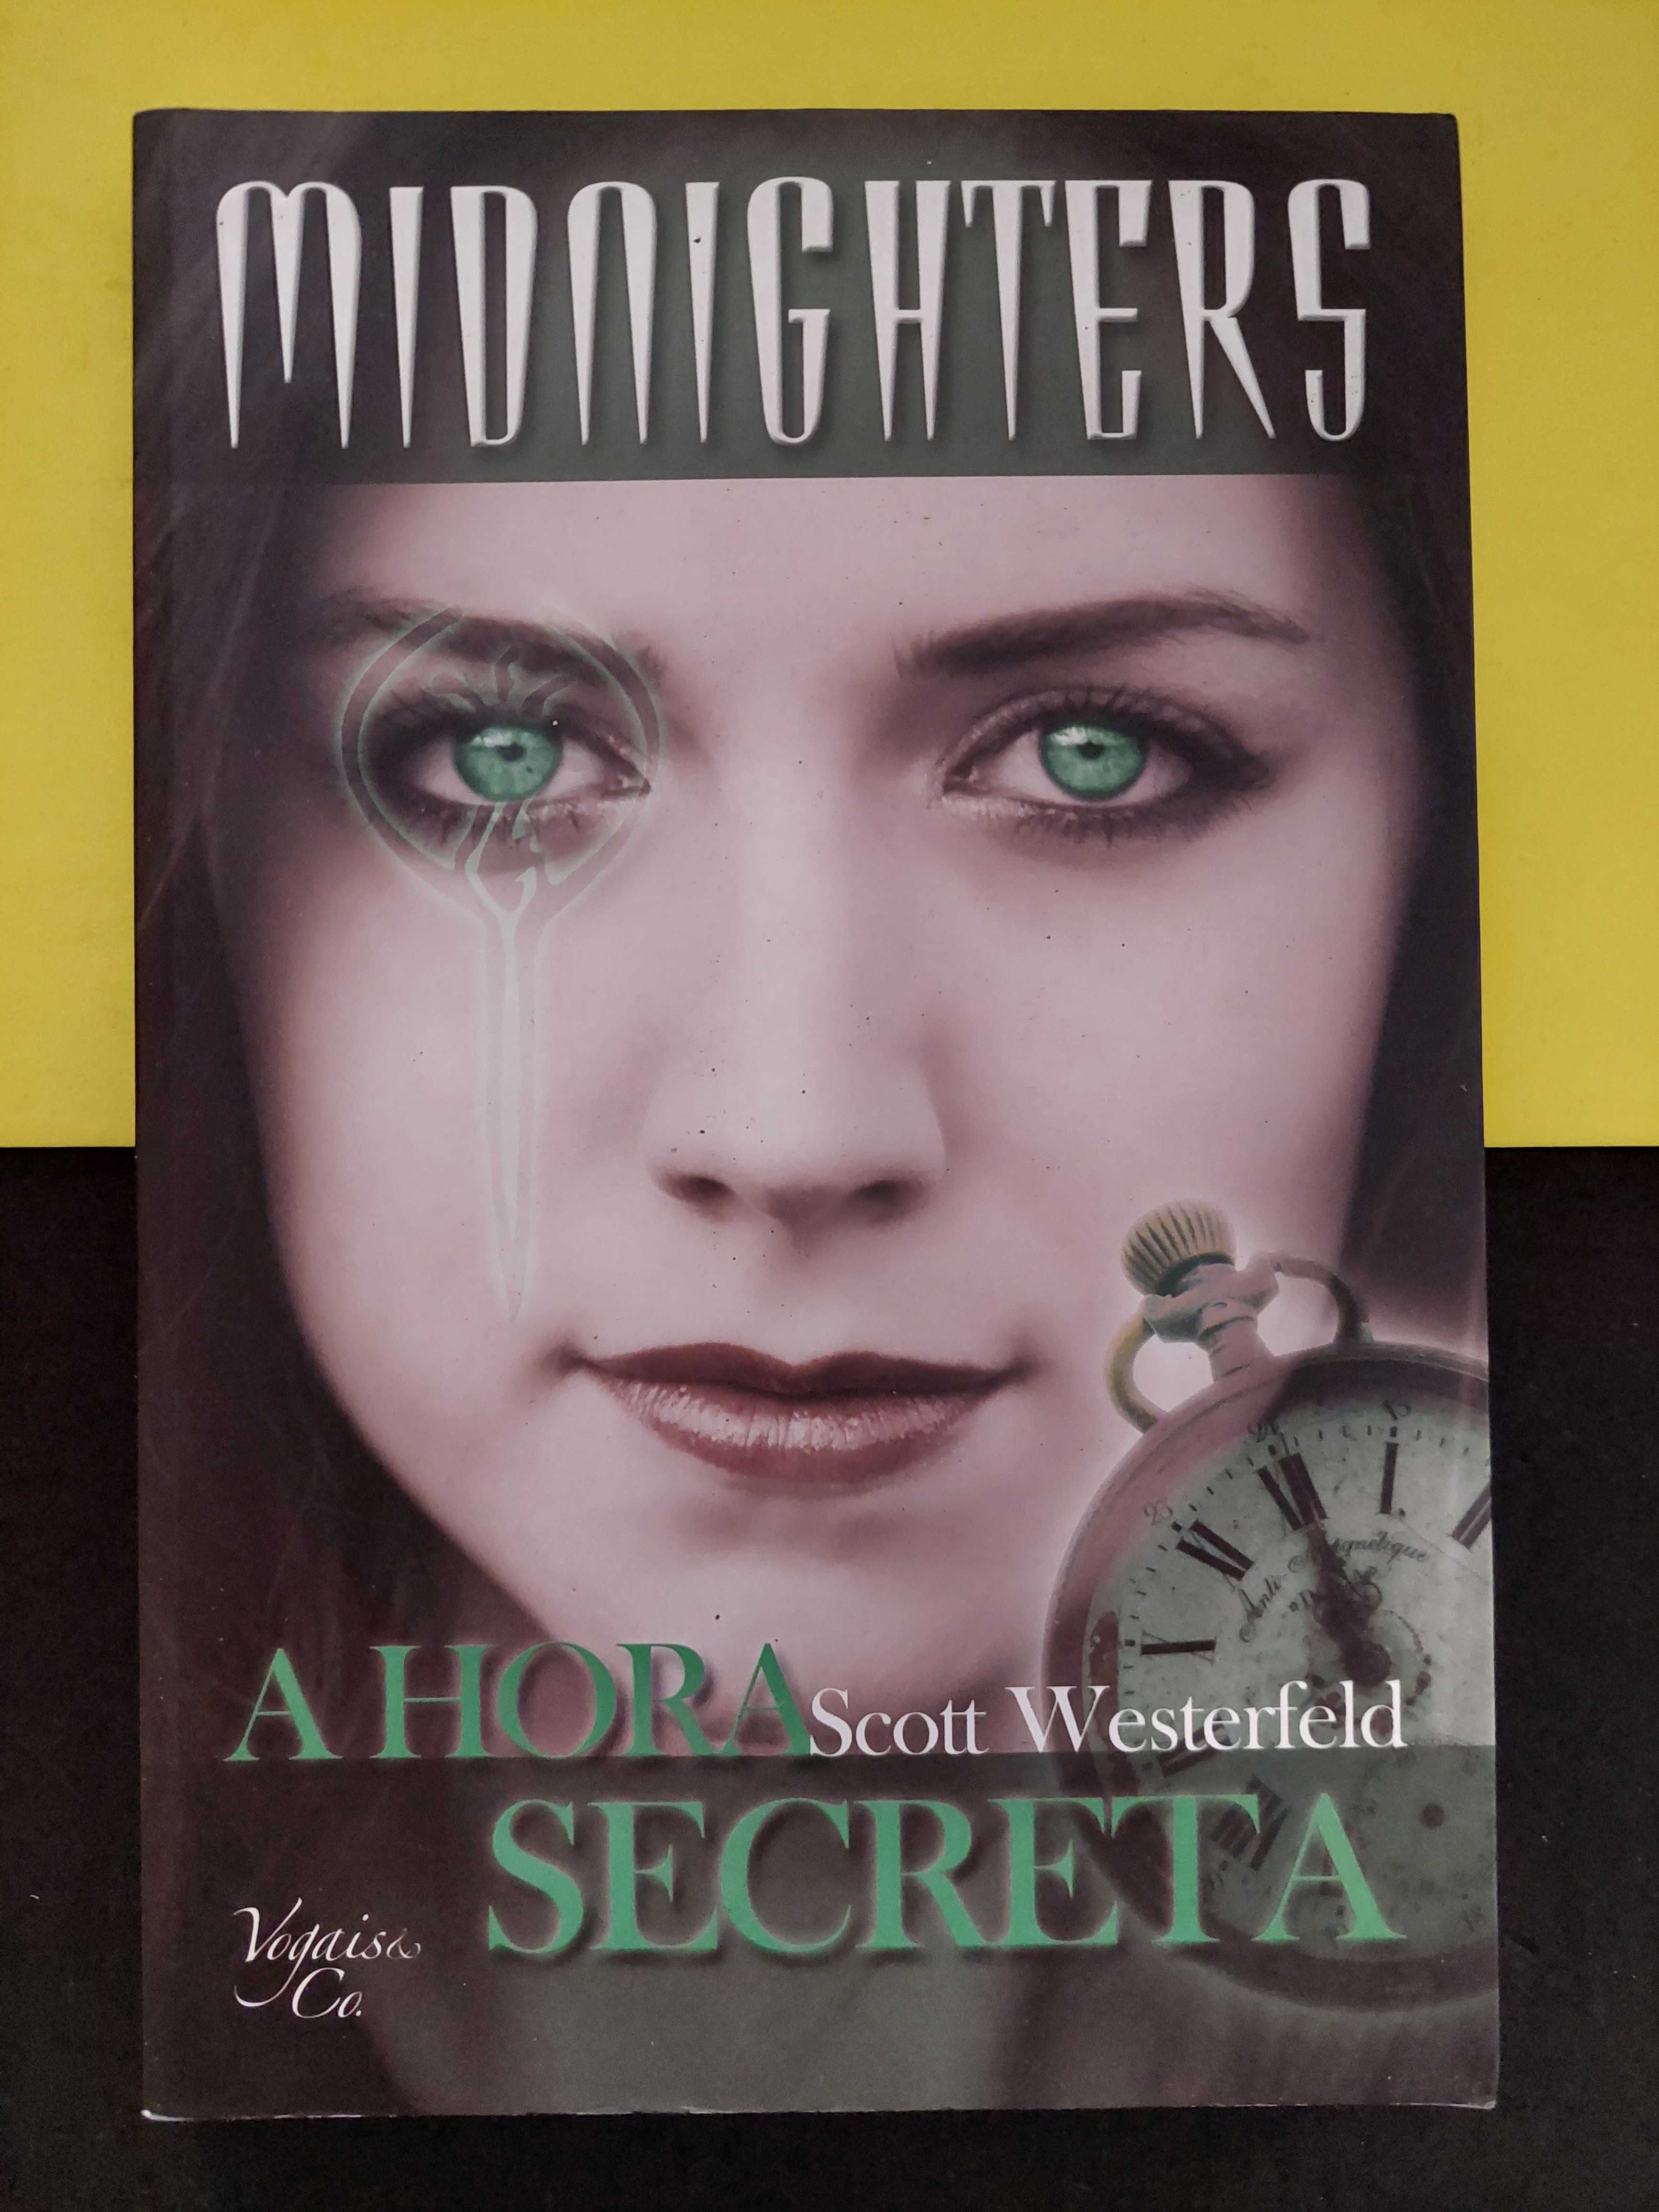 Scott Westerfeld - A Hora Secreta, Midnighters - Volume I